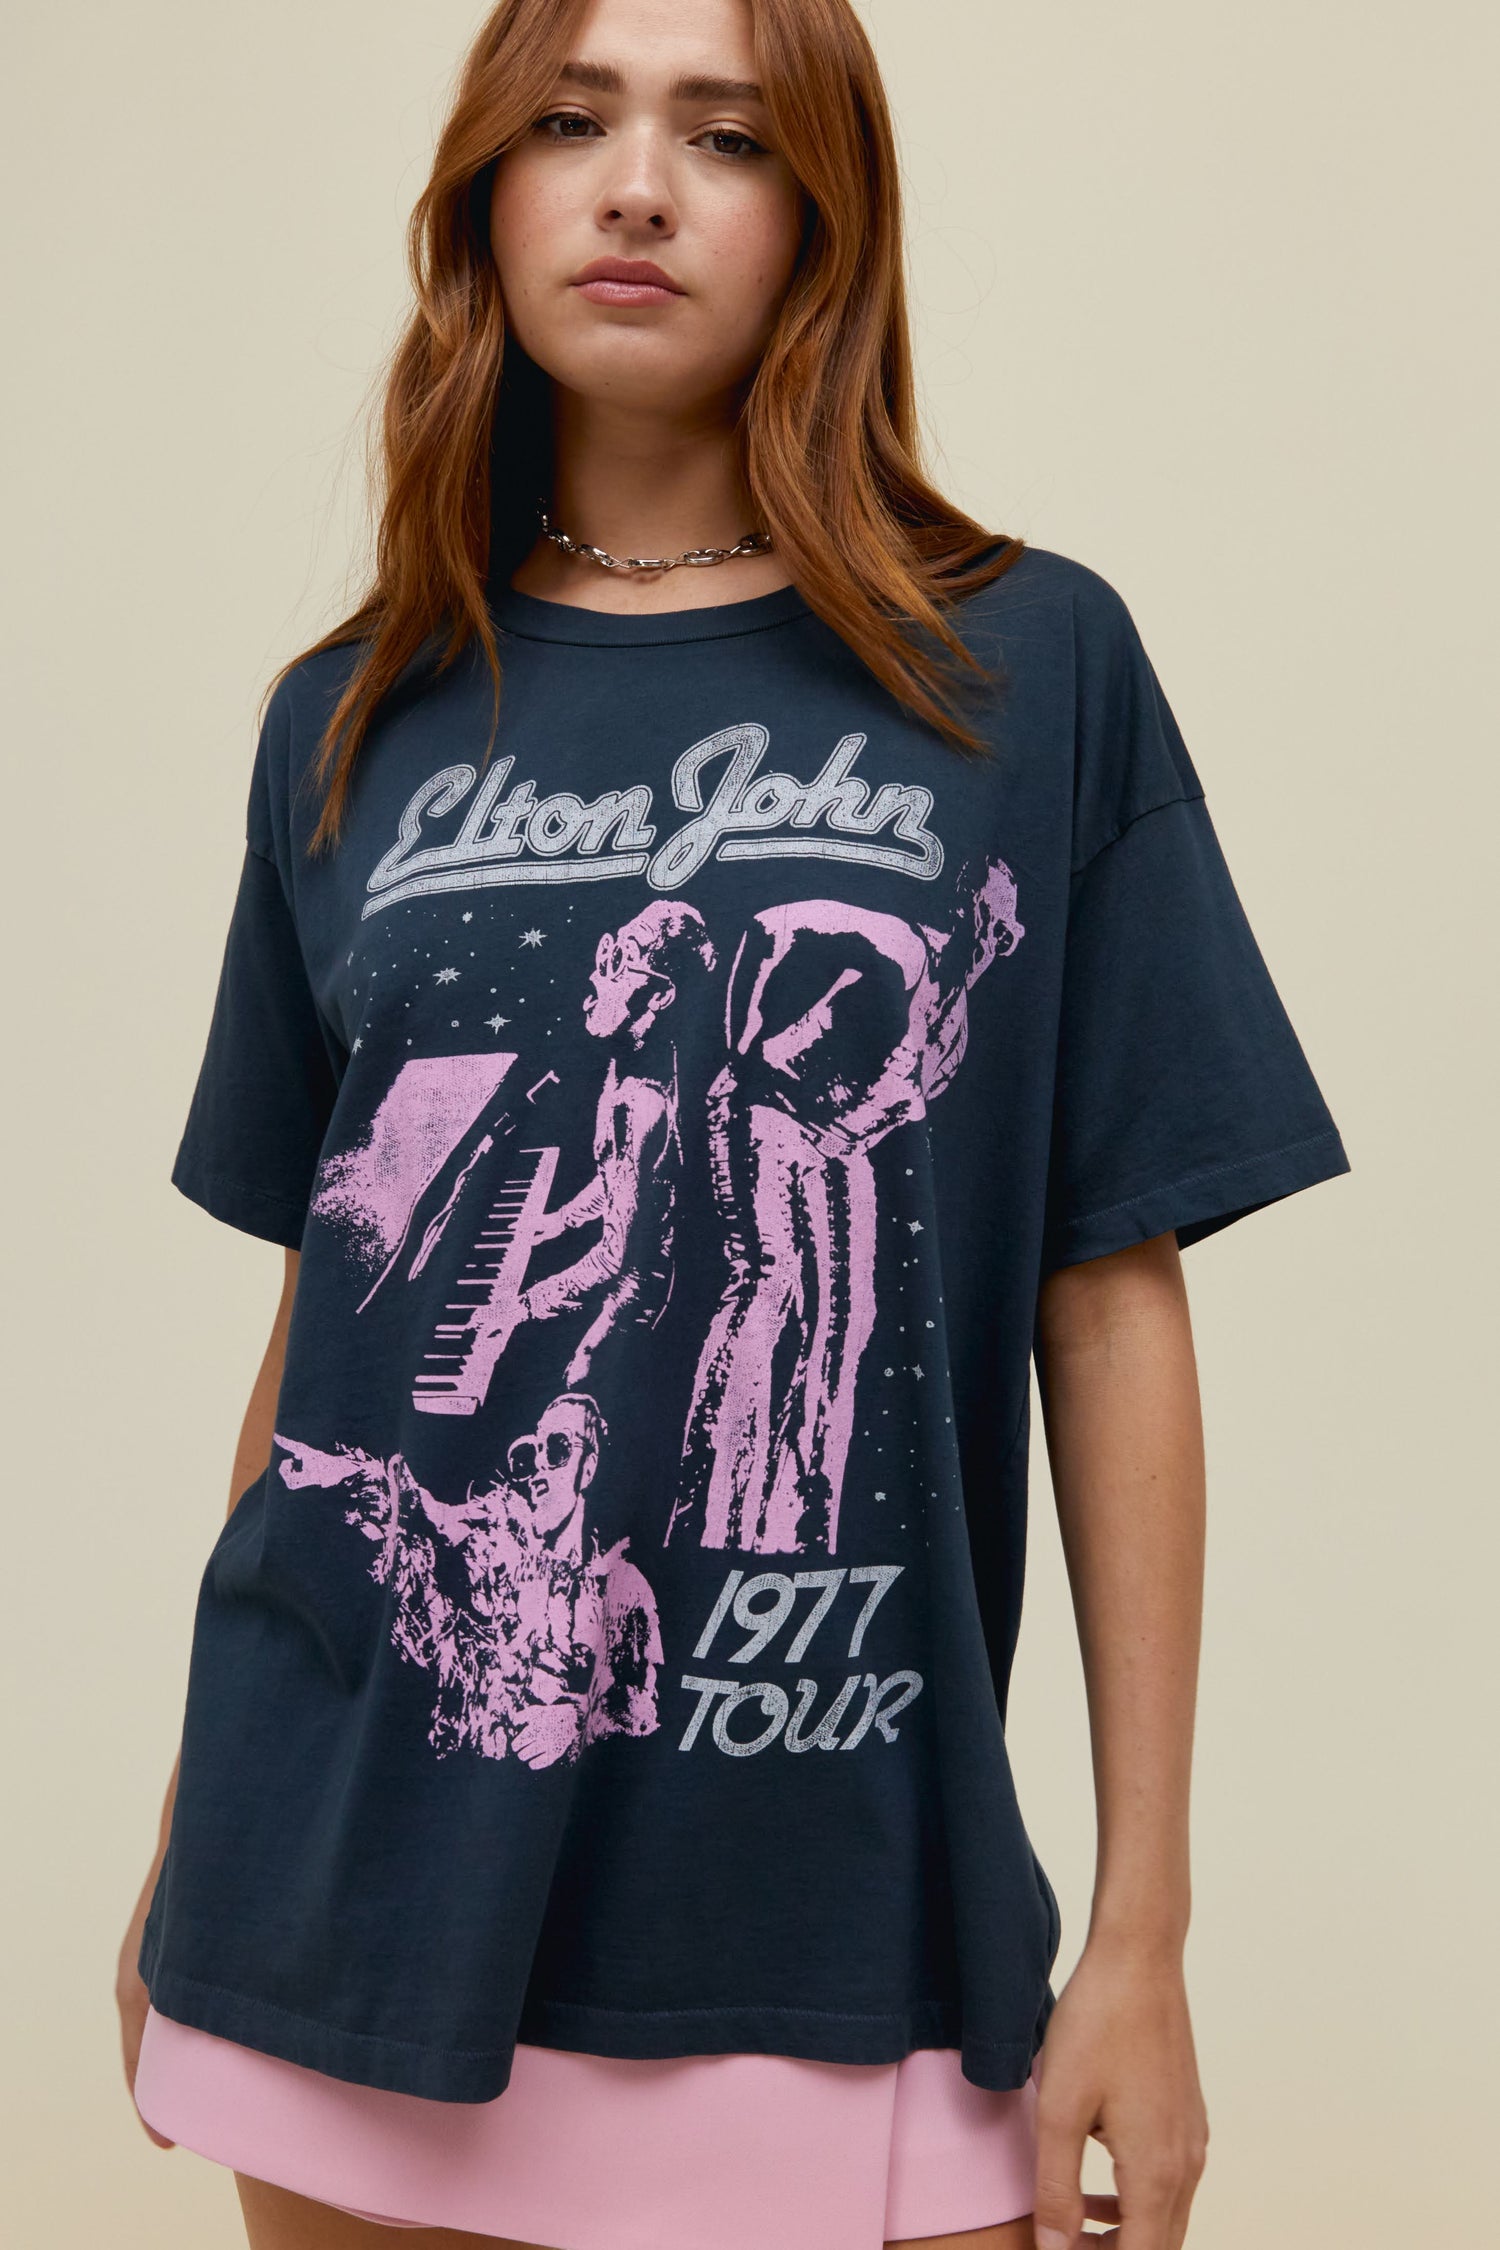 Model wearing a vintage black Elton John 1997 Tour graphic tee with contrast pink artwork.